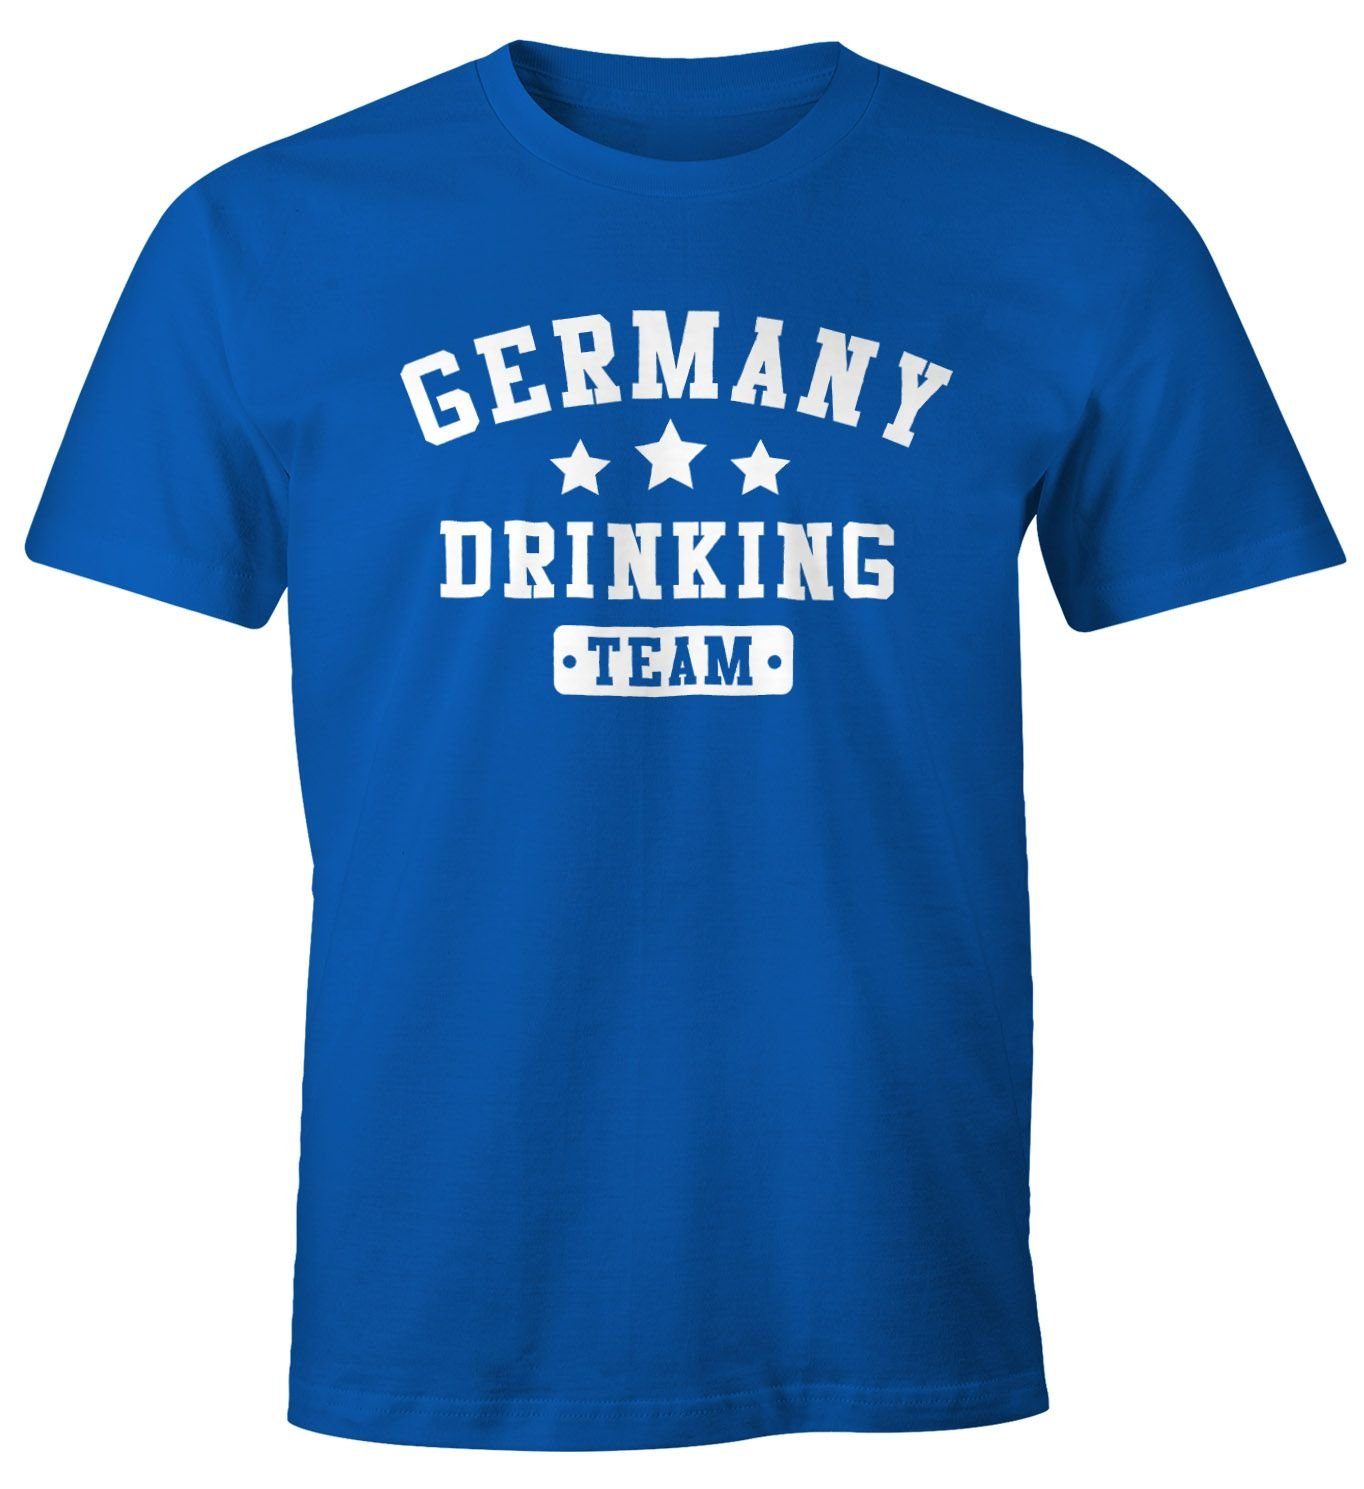 MoonWorks Print-Shirt Herren T-Shirt Germany Drinking Team Bier Fun-Shirt Moonworks® mit Print blau